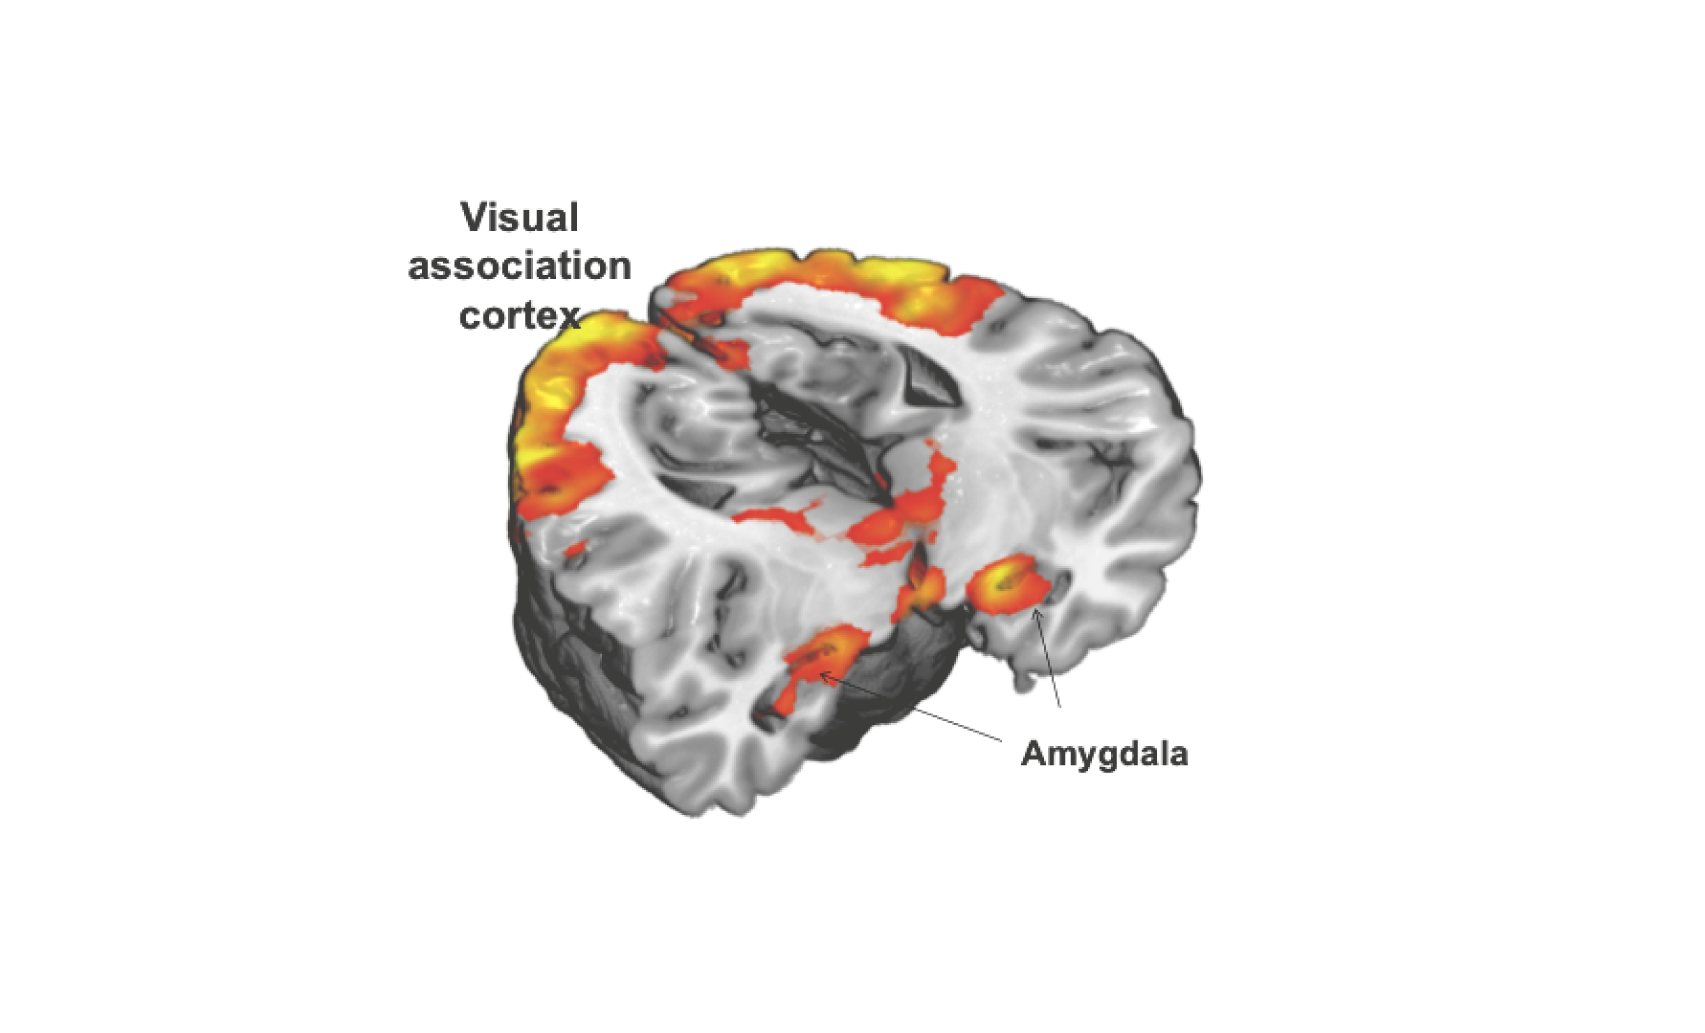 *add new title - Amygdala and visual association cortex